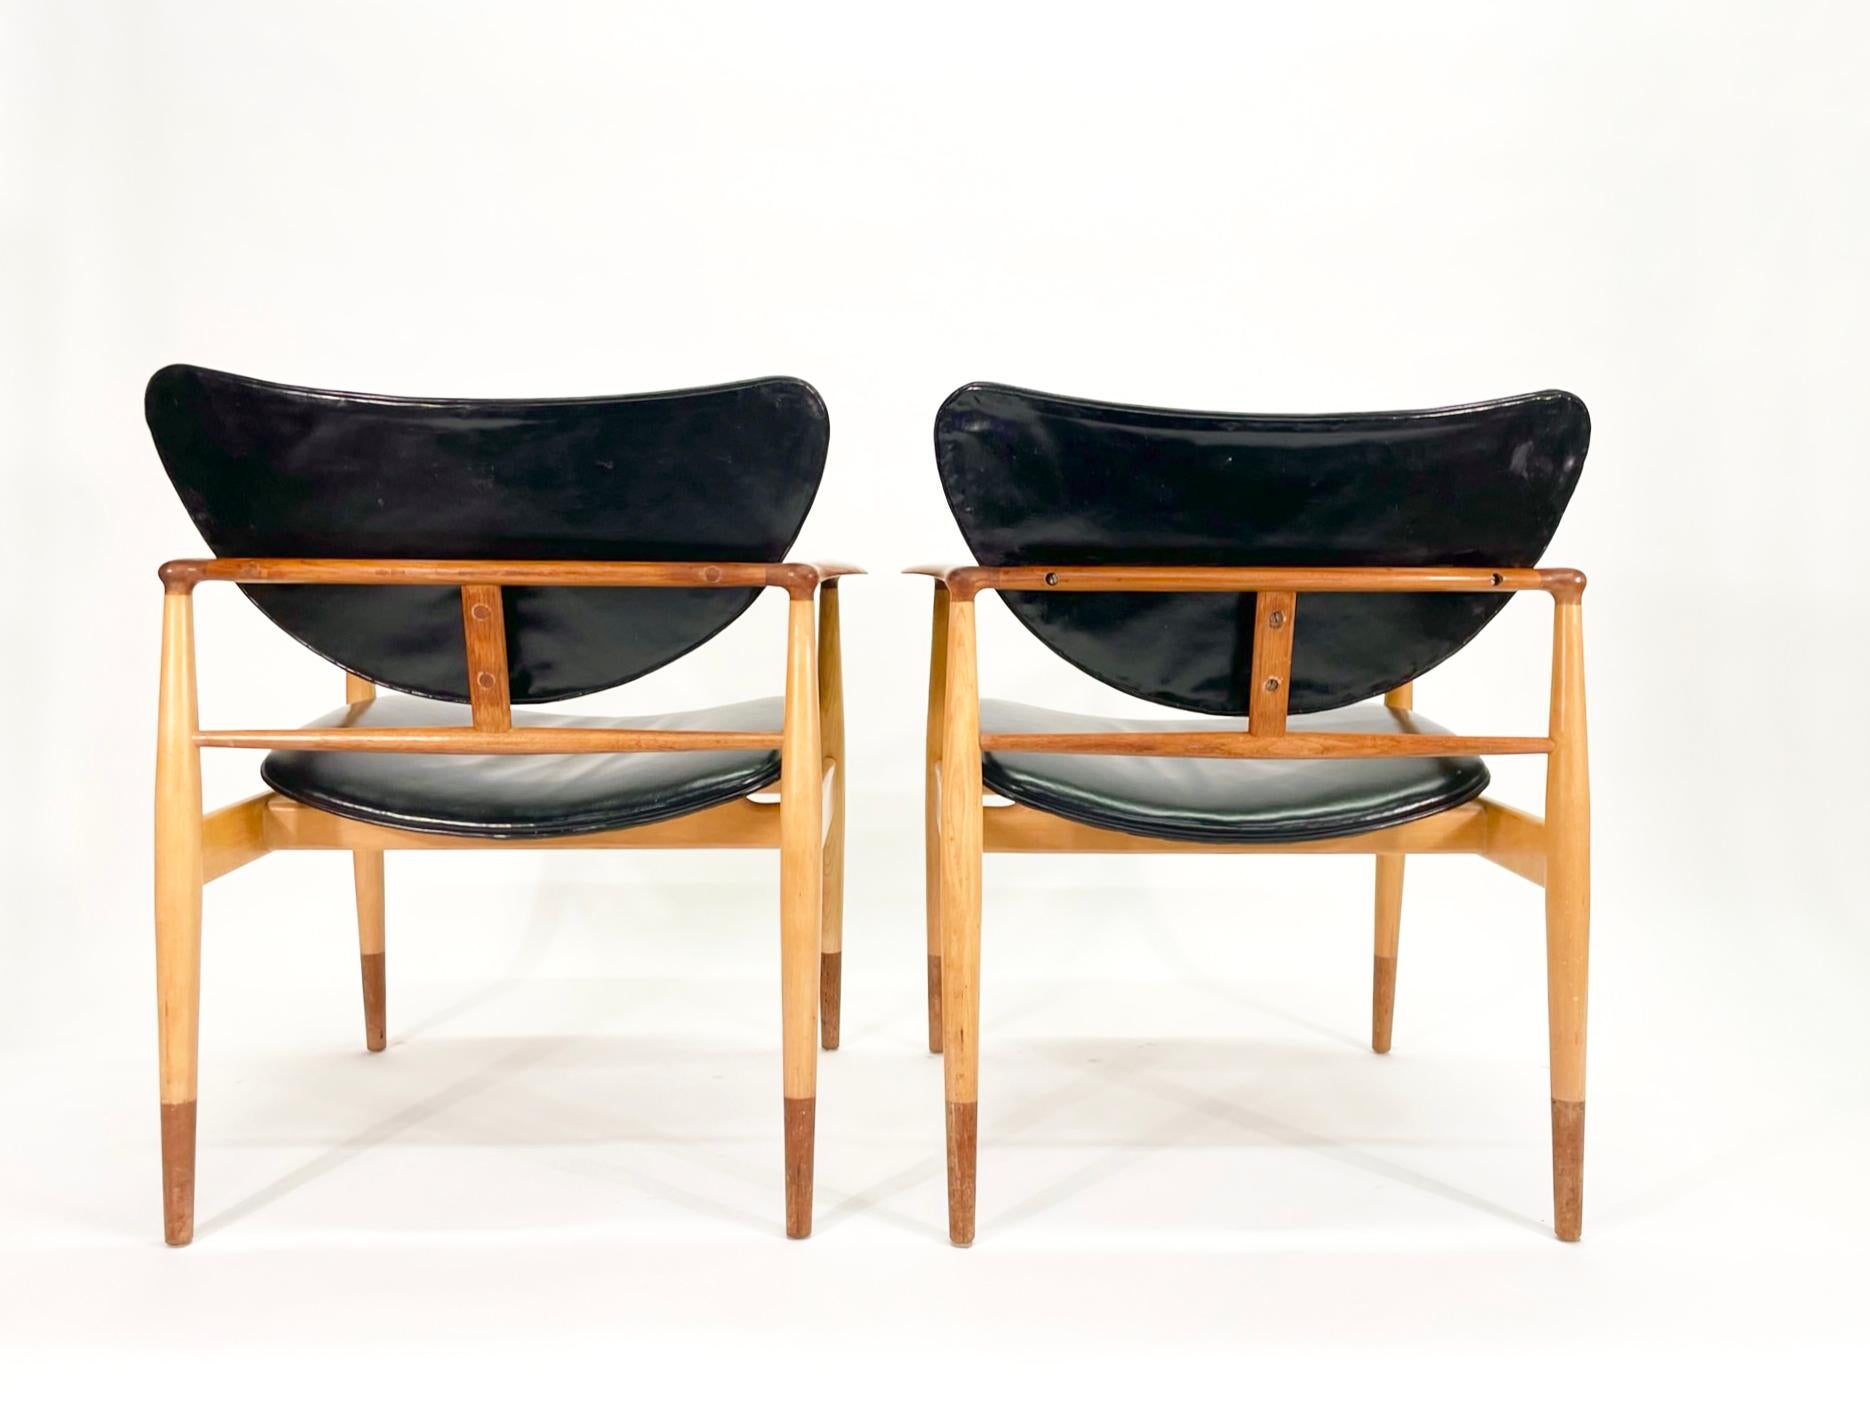 Mid-Century Modern Finn Juhl Model 48 Chair by Baker, in Teak and Maple (2 available) For Sale